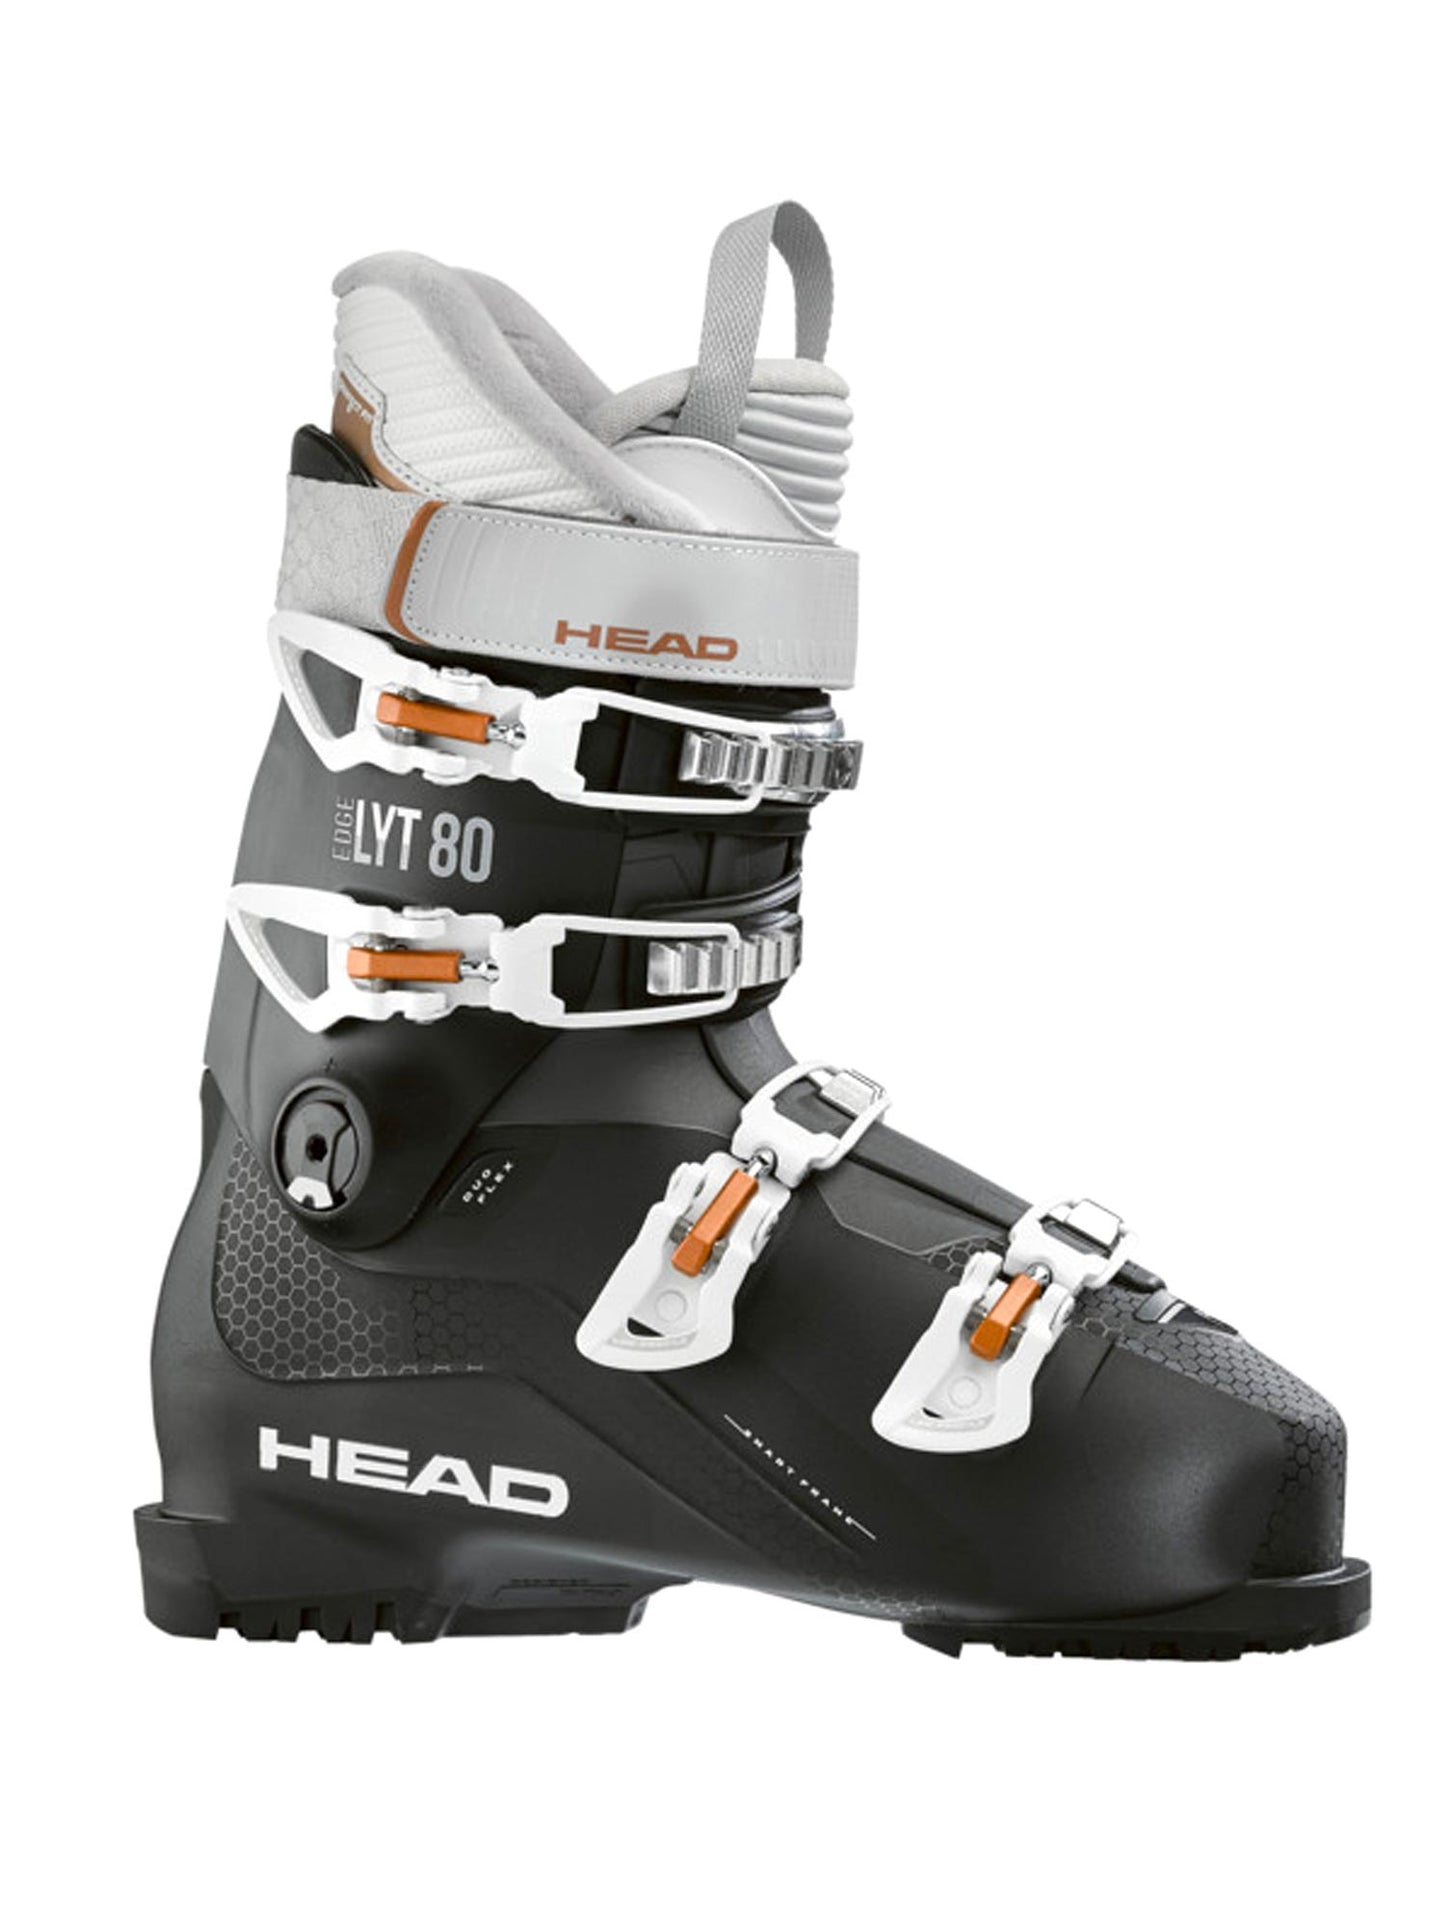 women's Head Edge Lyt ski boots, black with white buckles